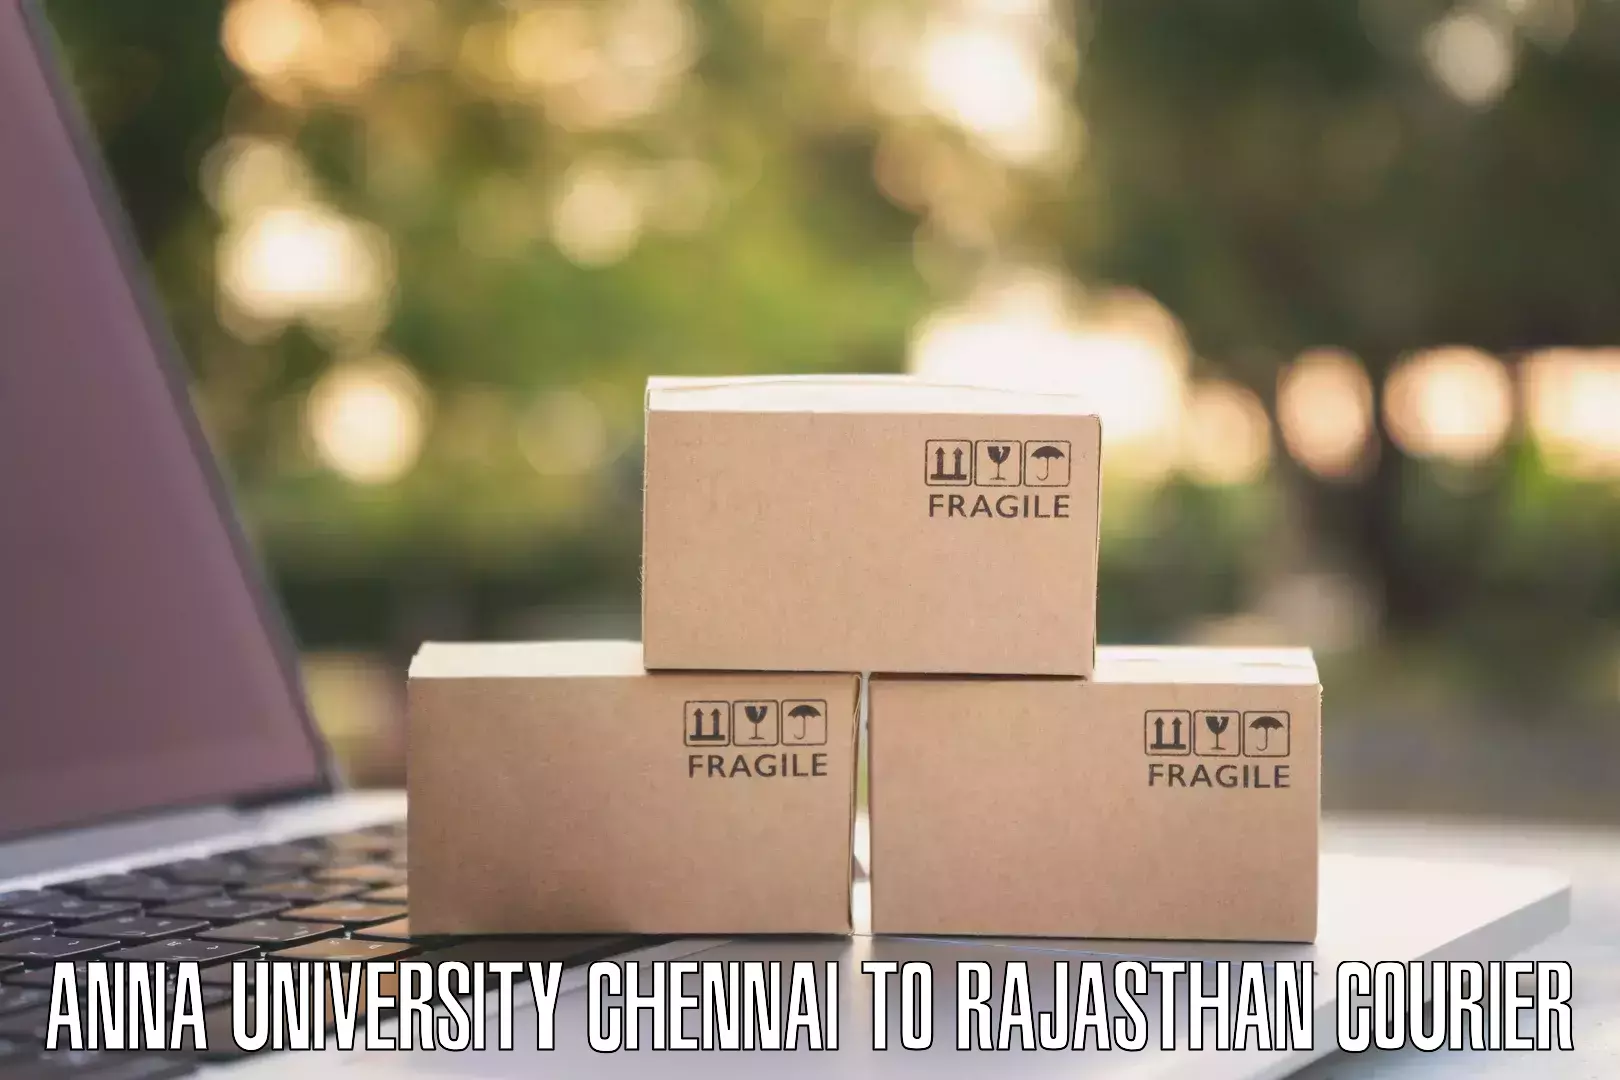 Courier service efficiency Anna University Chennai to Banasthali Vidyapith